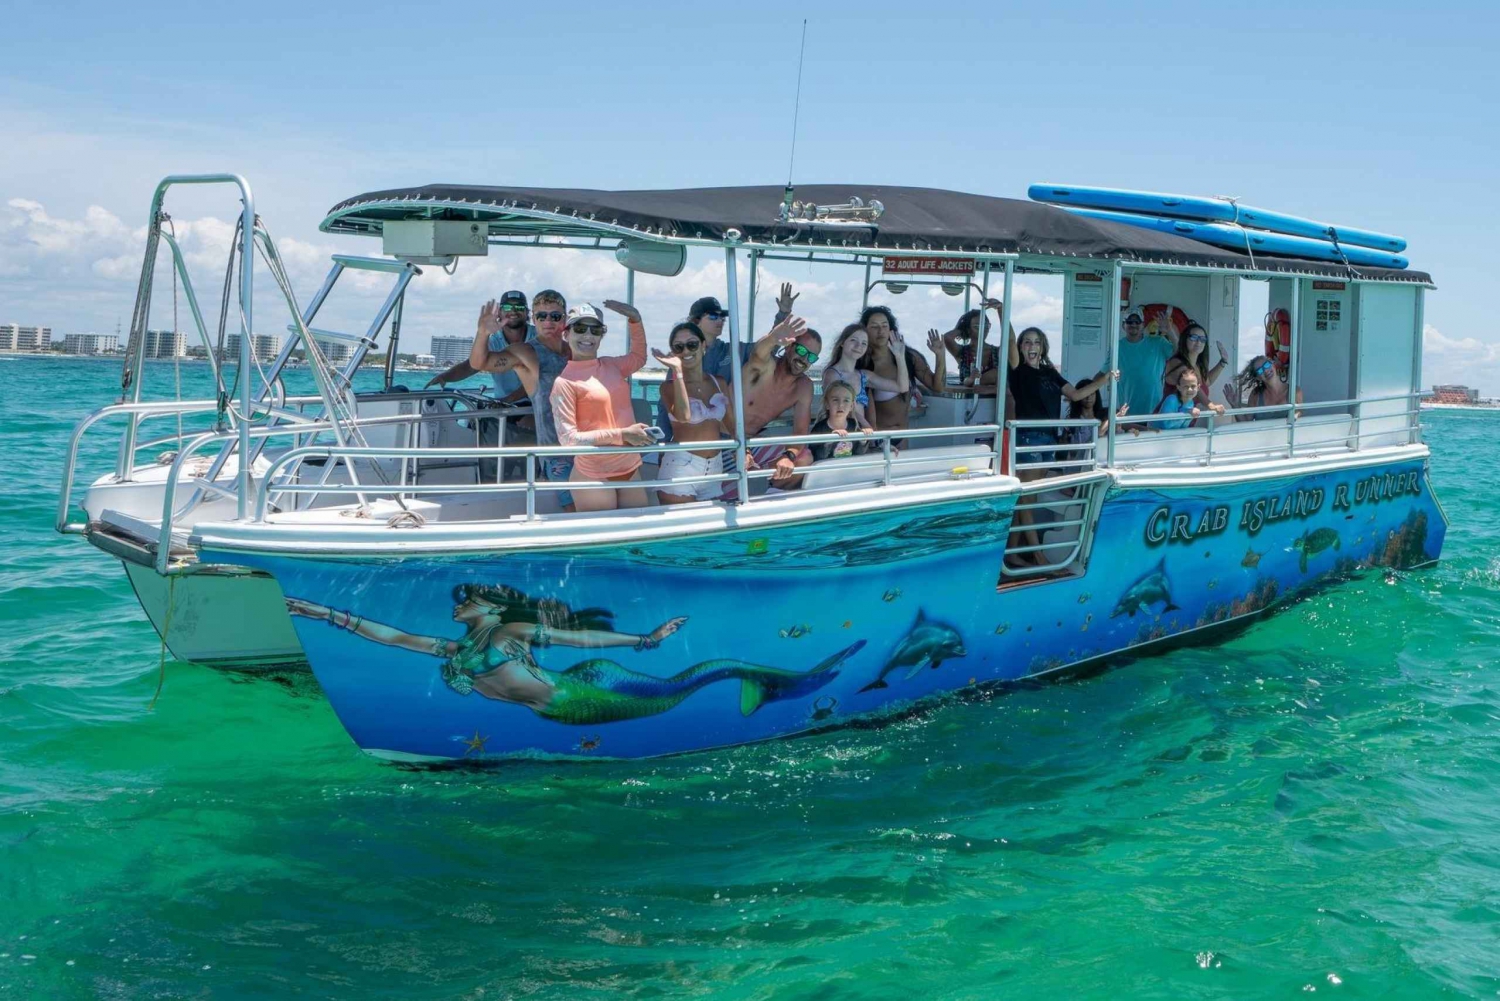 Destin: Dolphin Watching 'Crab Island Runner' Cruise